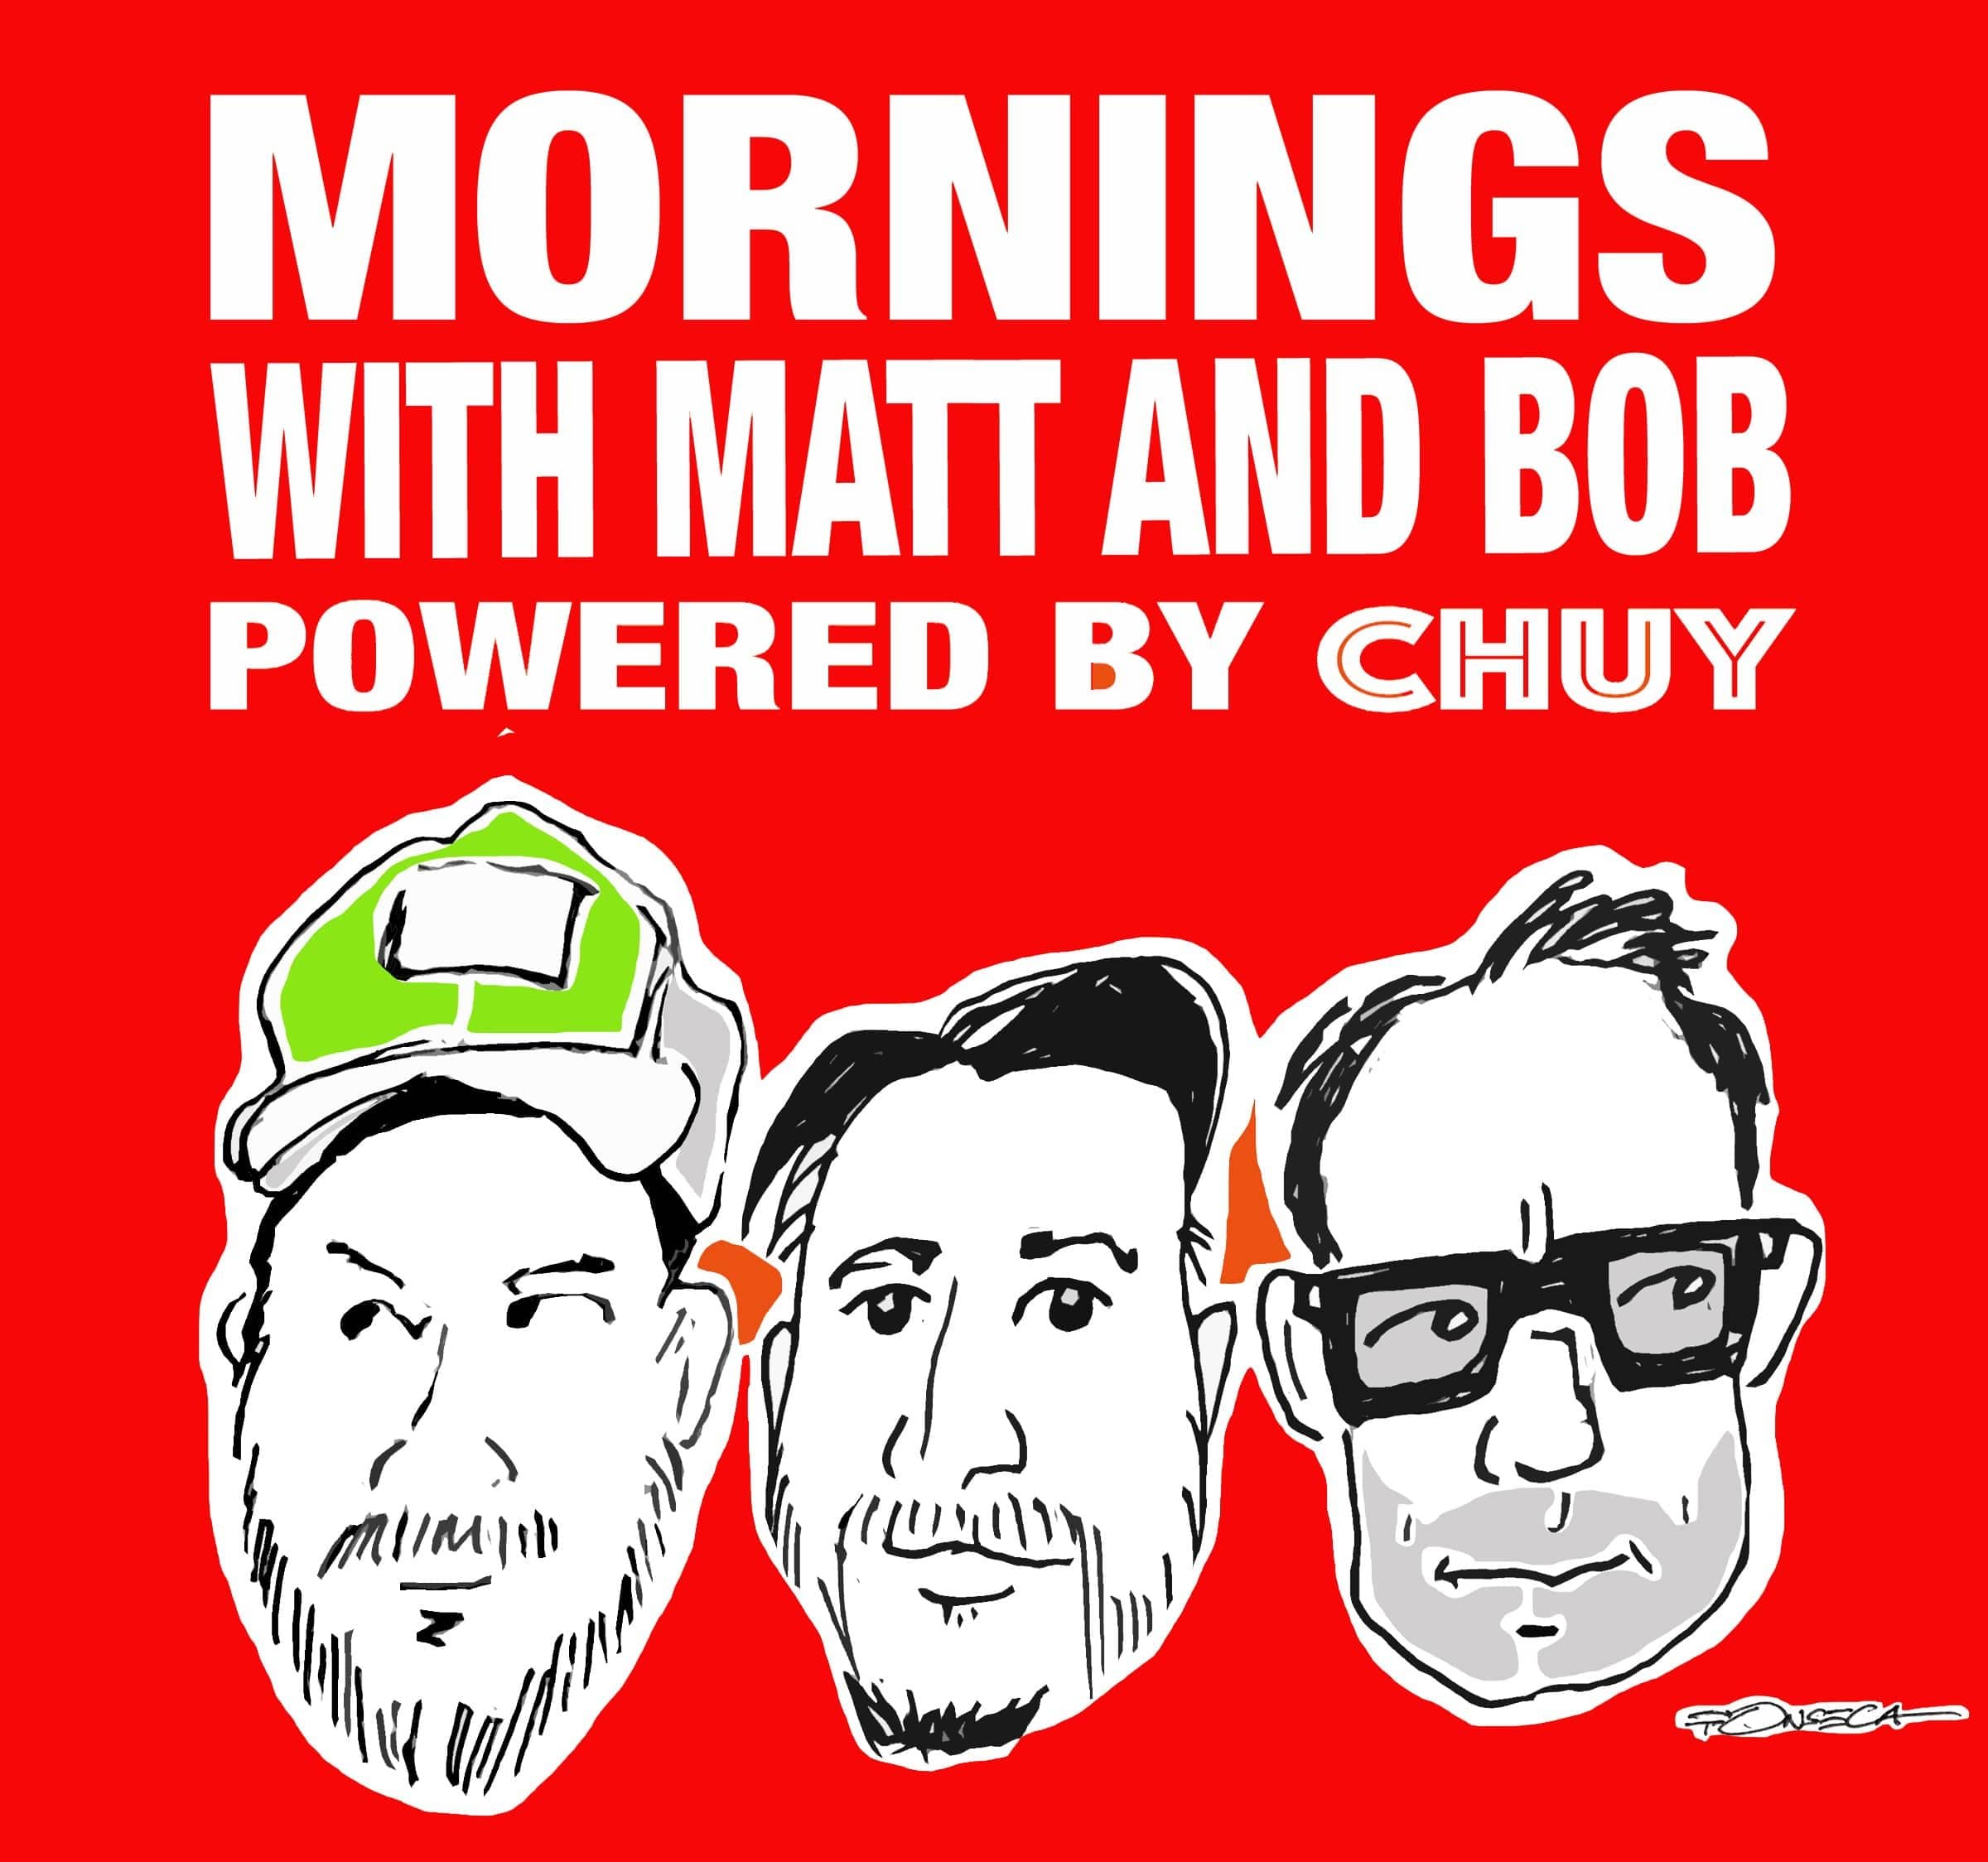 Mornings with Matt and BoB